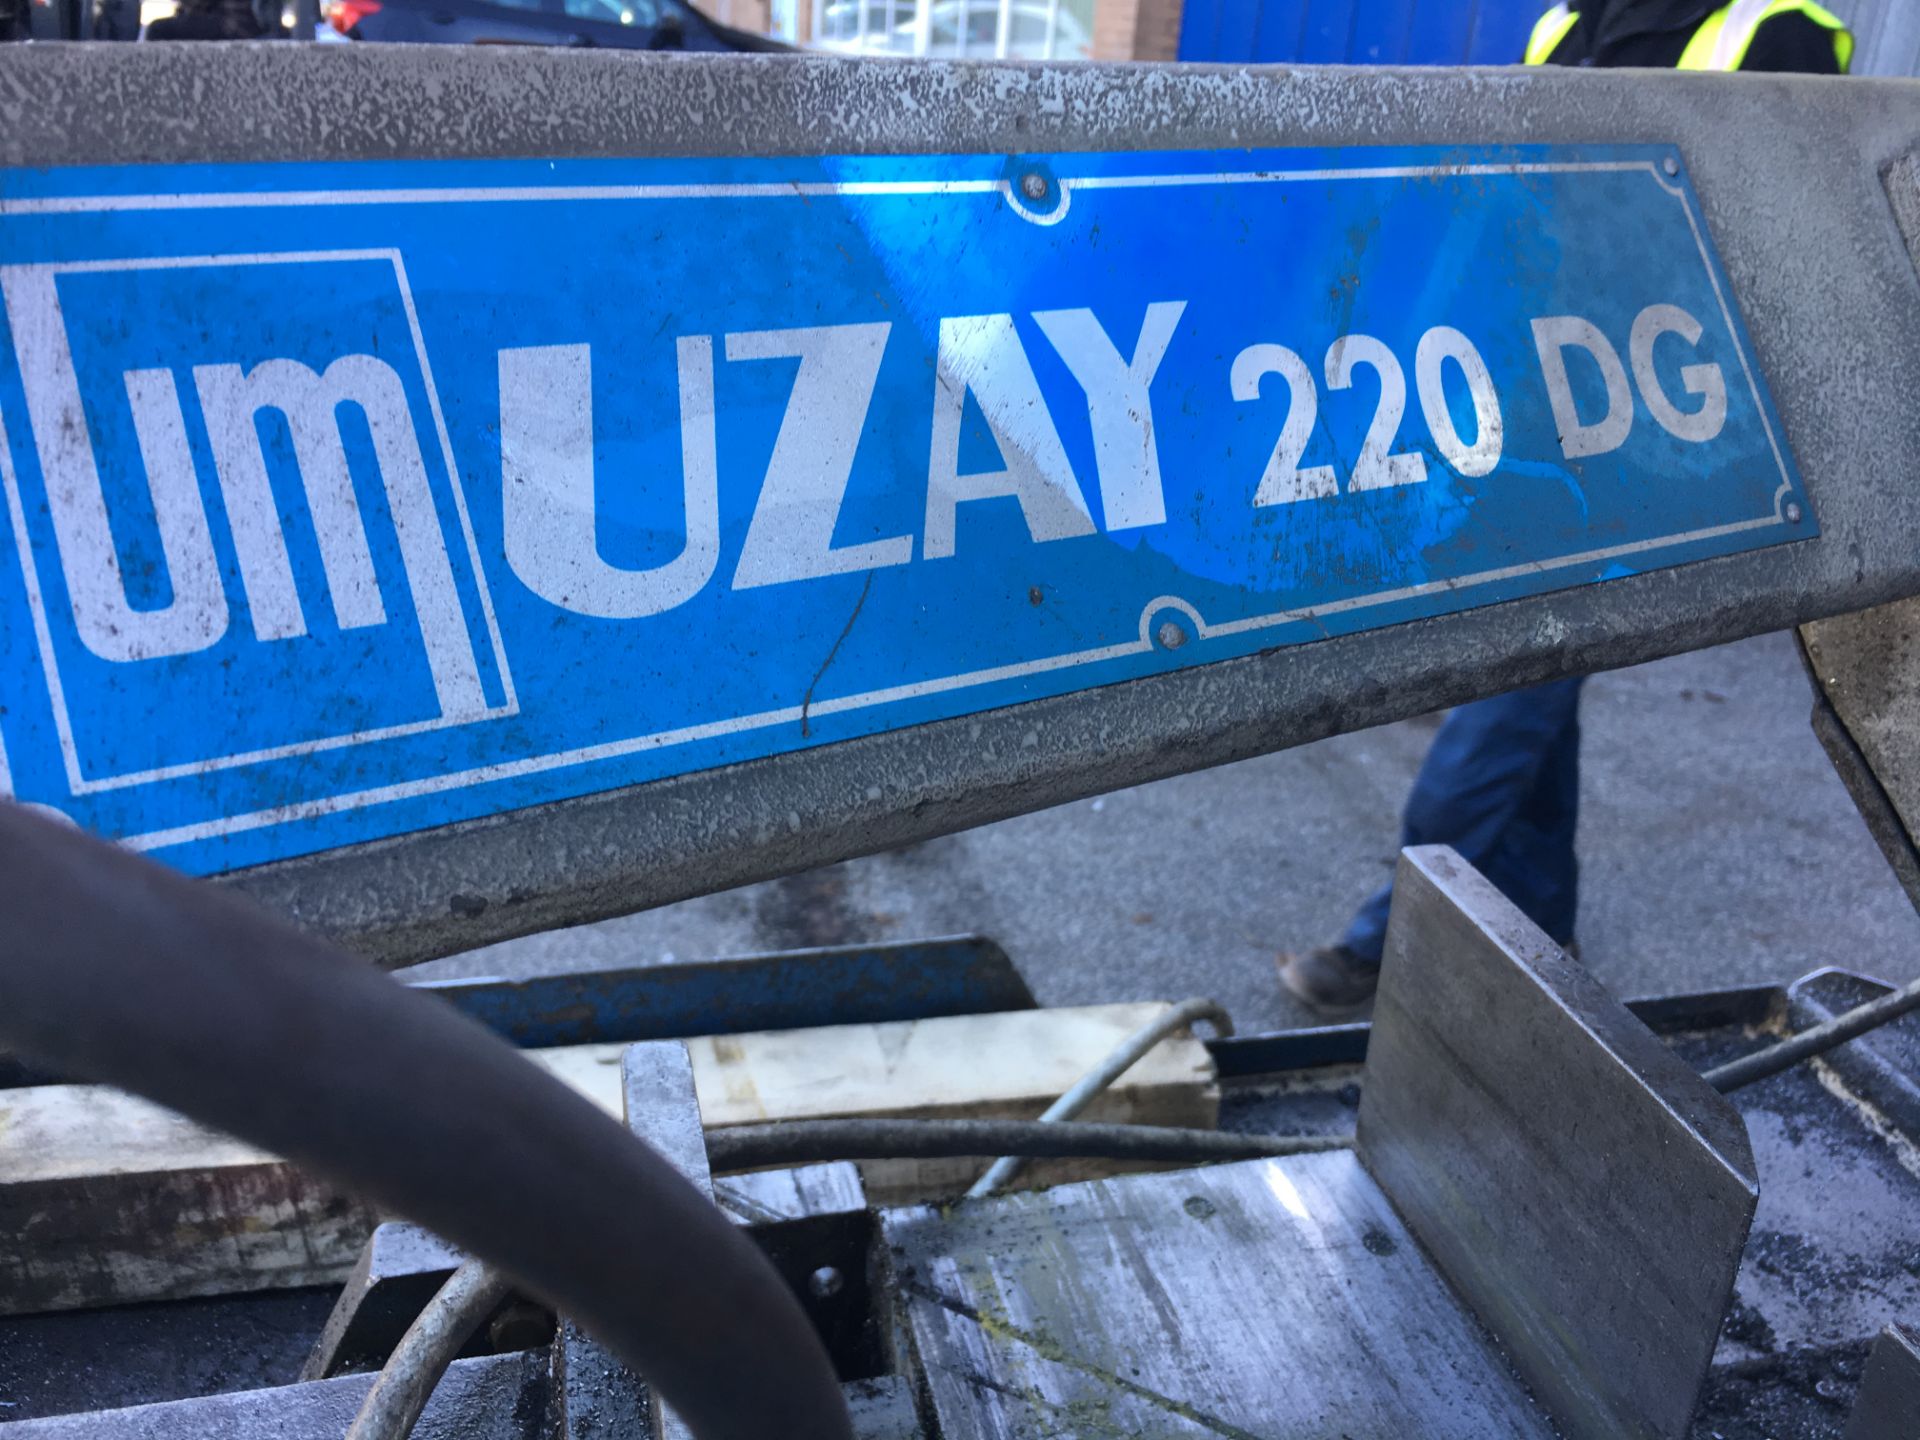 Uzay Makina 220DG Band Saw - Image 6 of 7